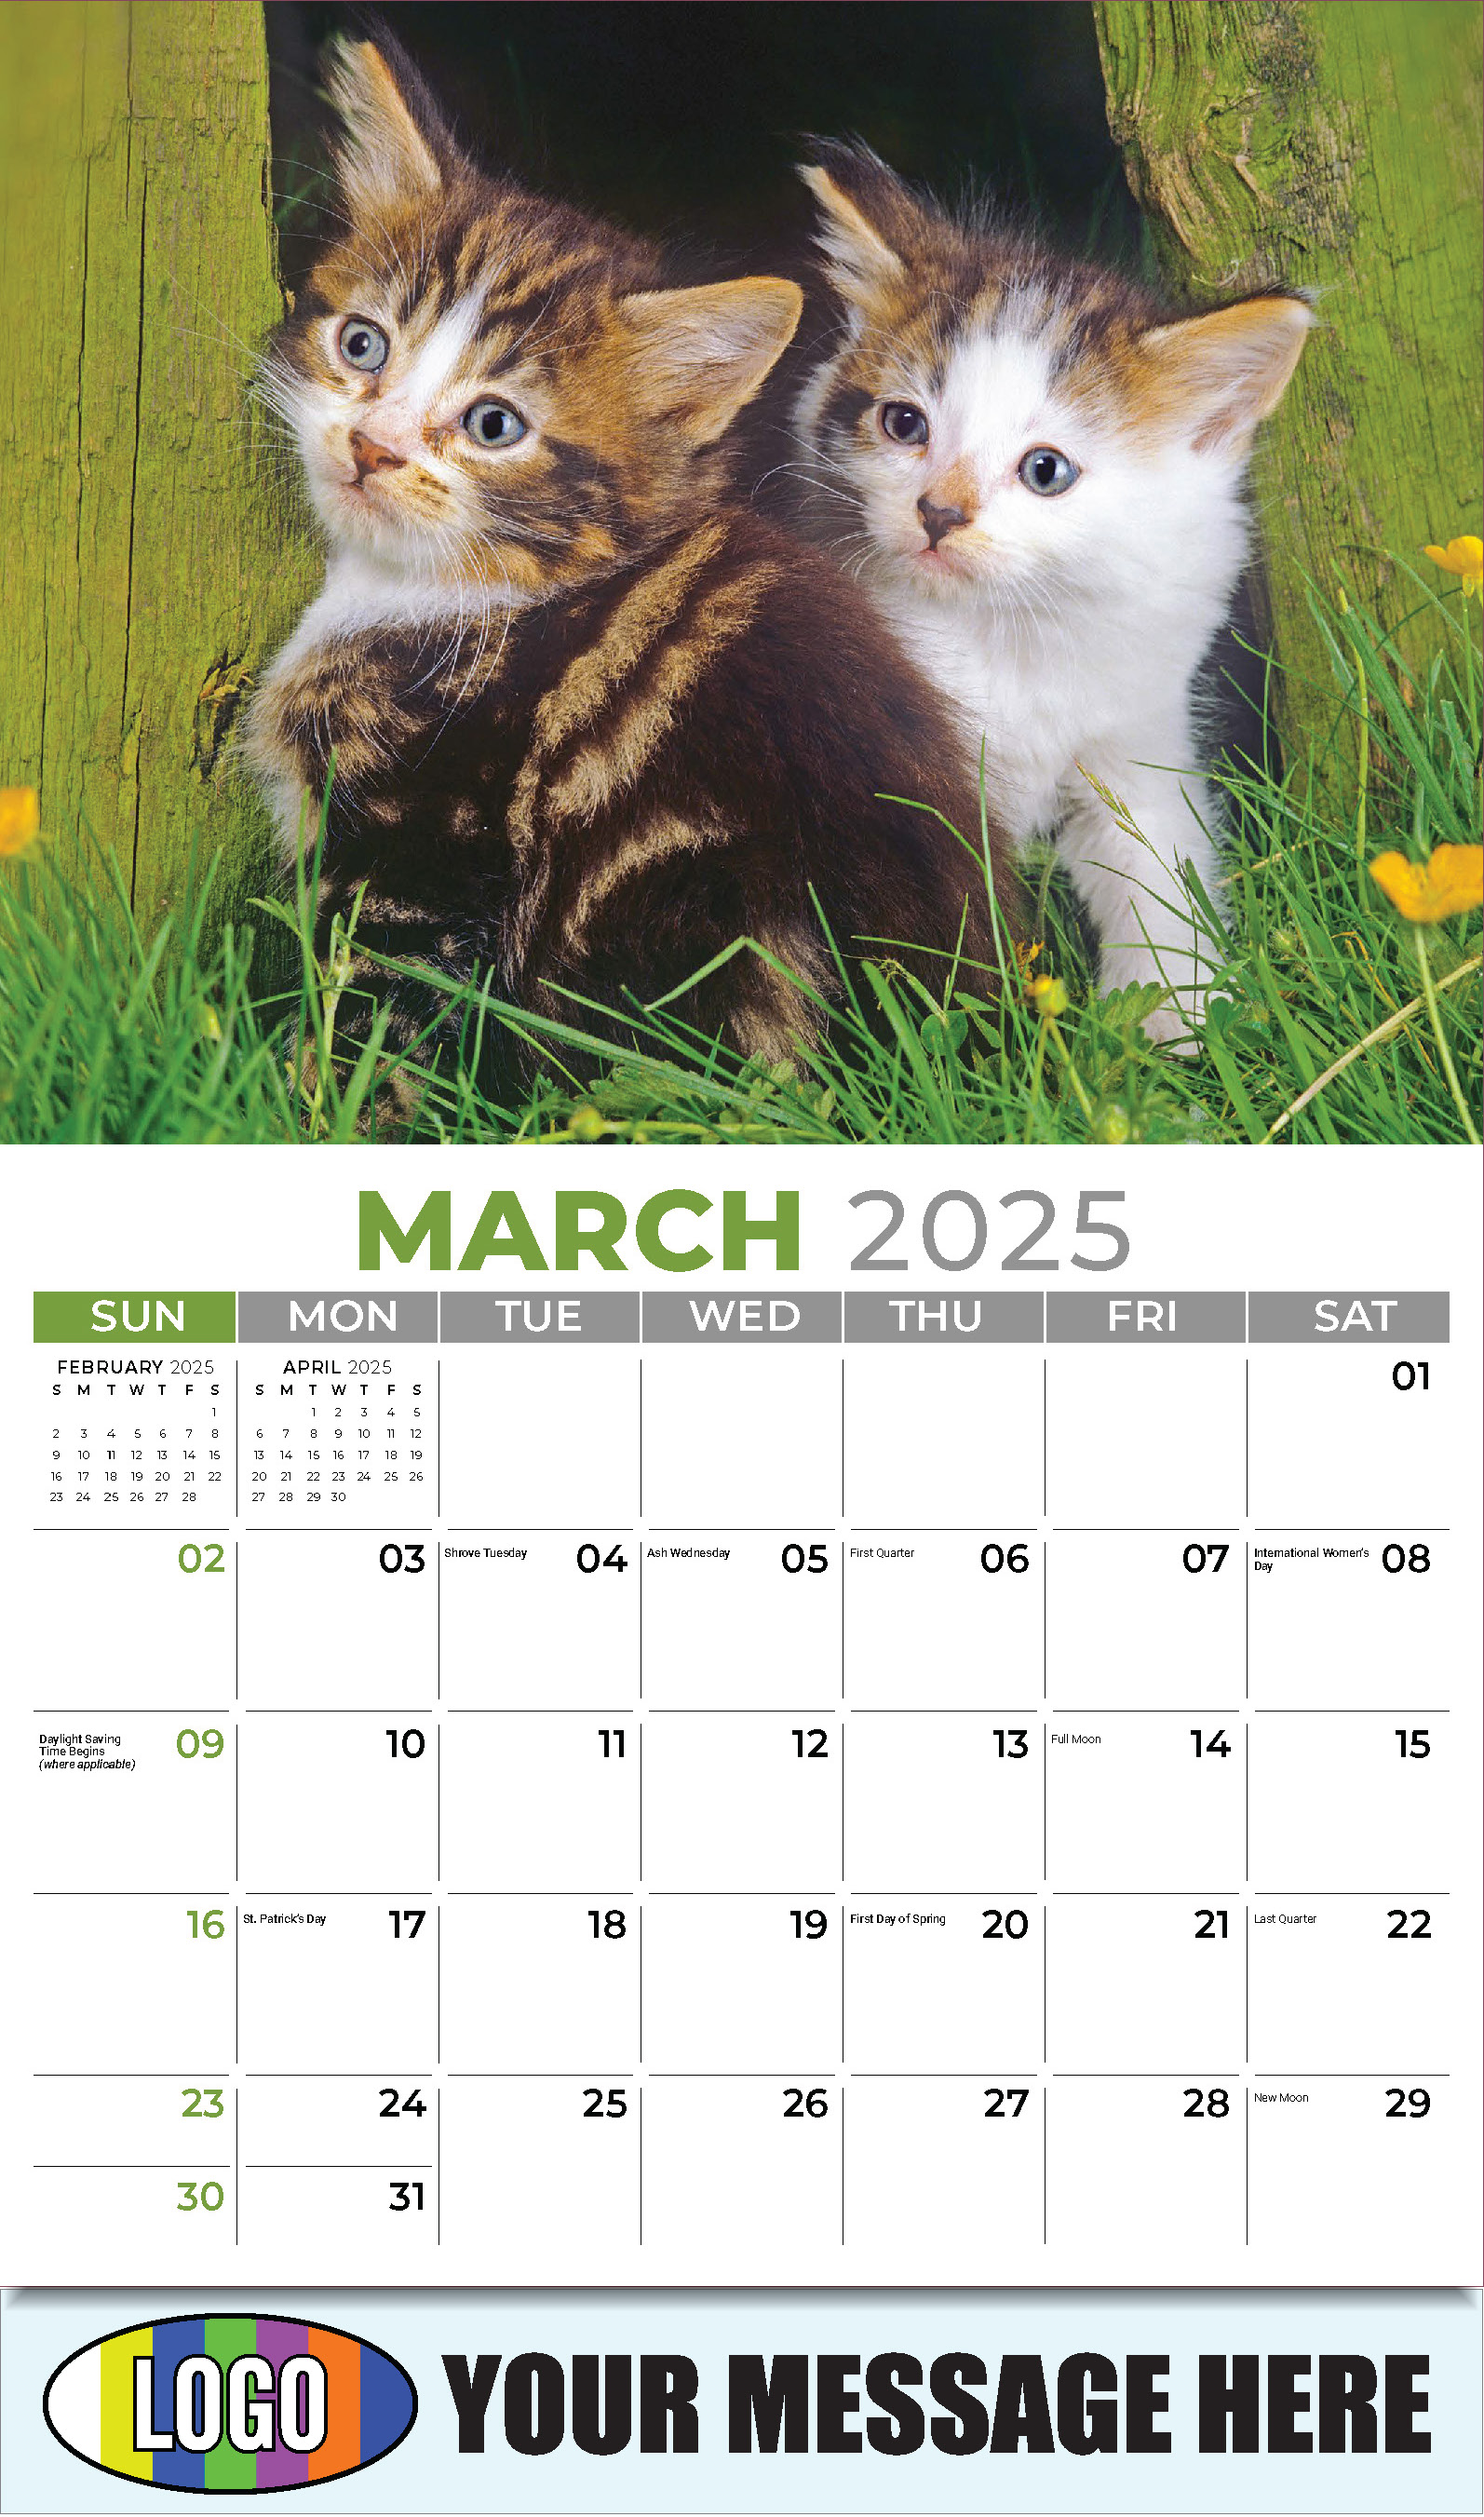 Kittens 2025 Business Promo Wall Calendar - March